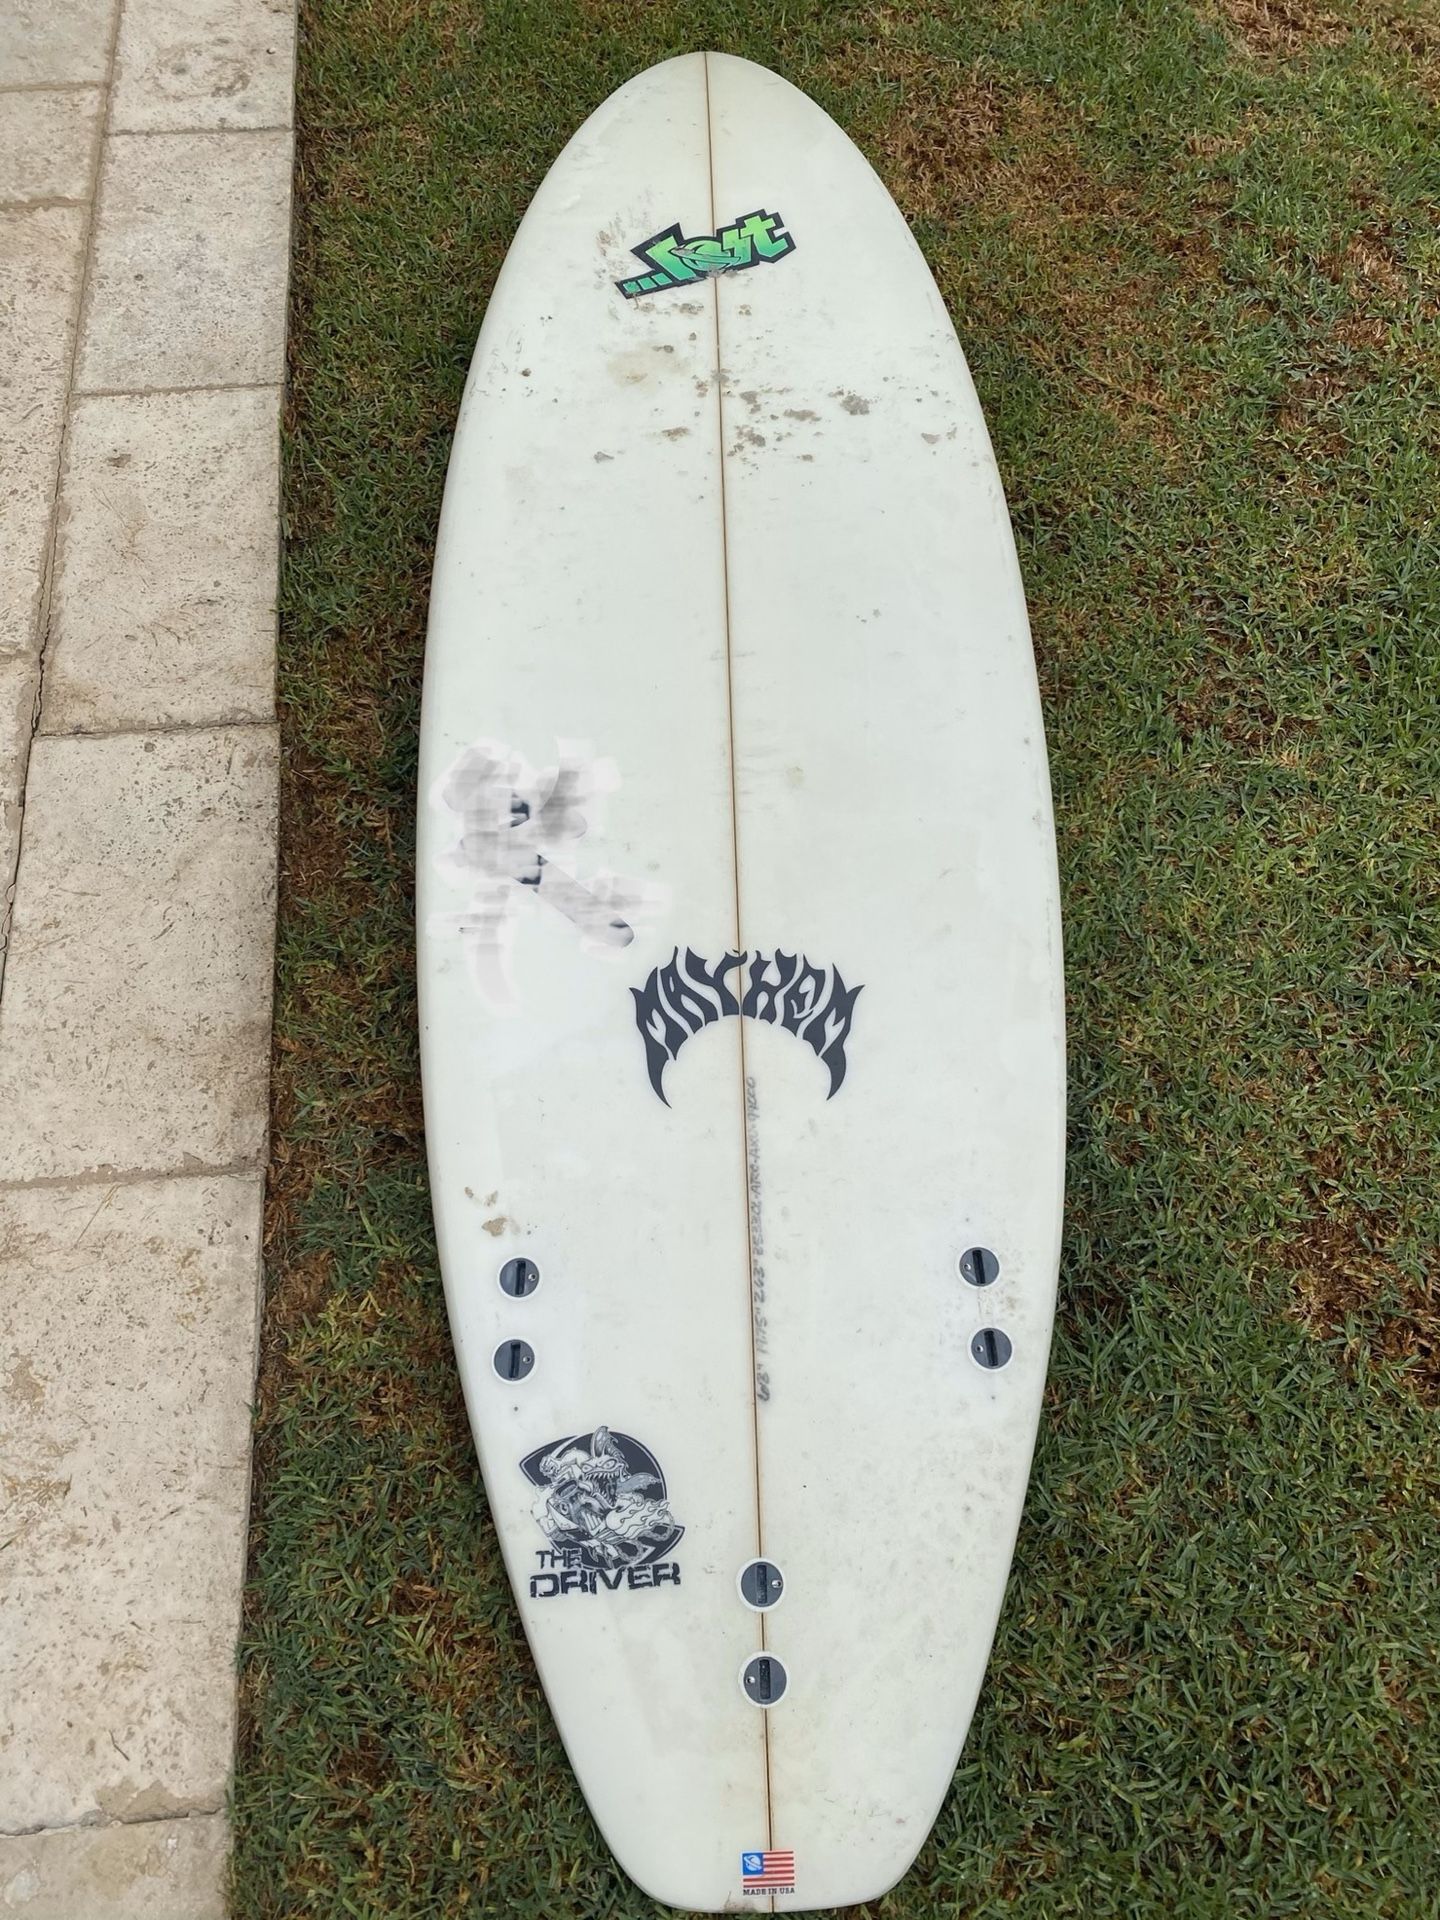 Lost Surfboard (6’ 3” Mayhem-The Driver)